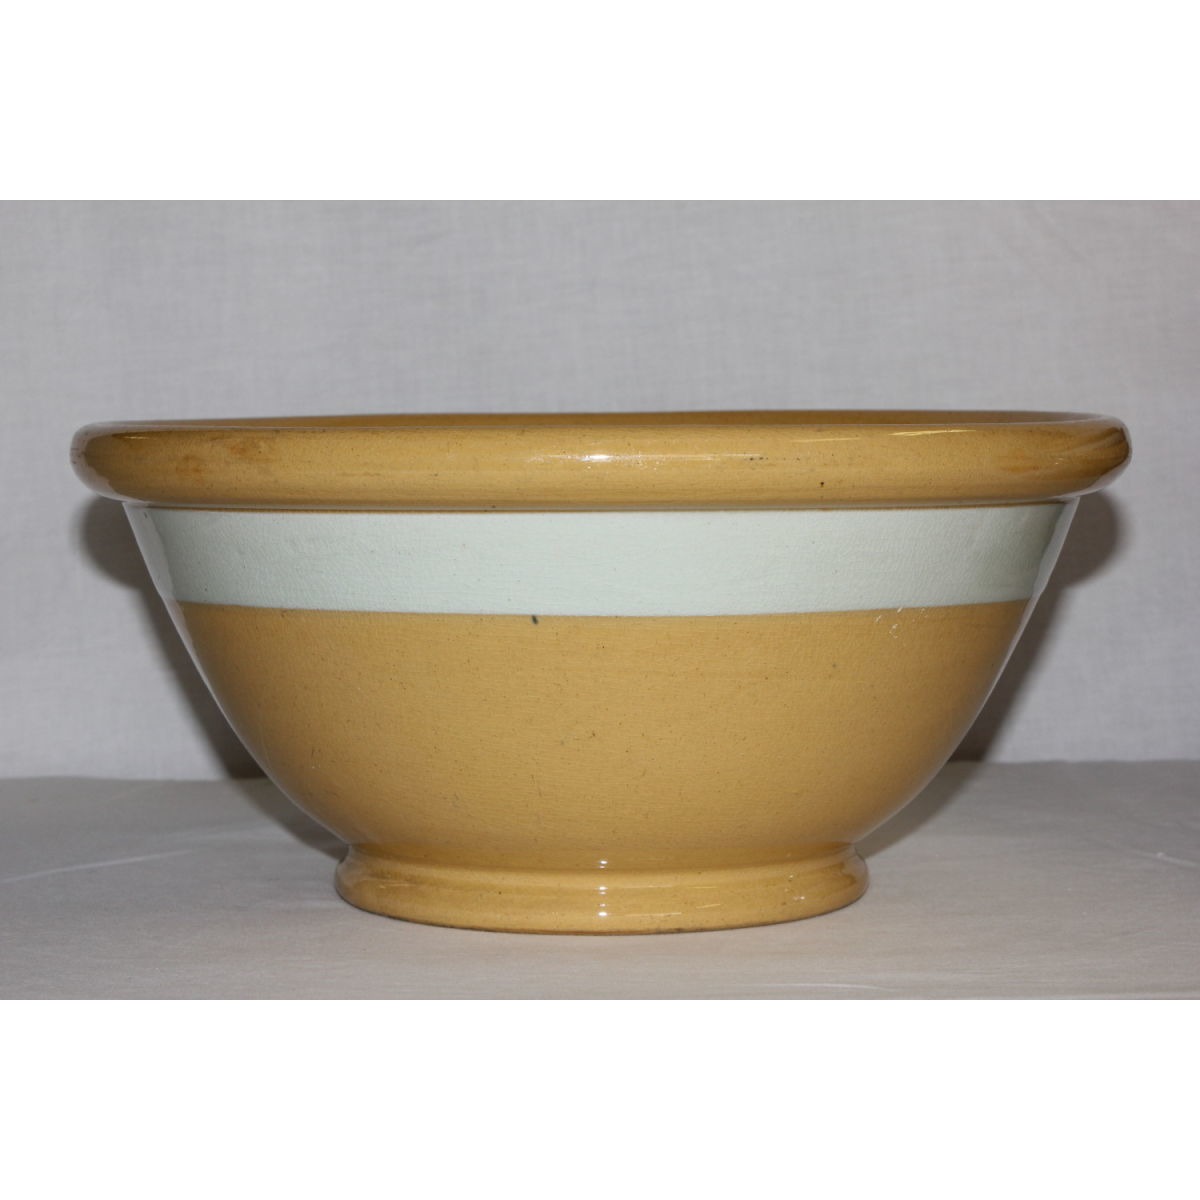 Stunning 12.75" Diameter Single Wide White Banded Yellowware Bowl